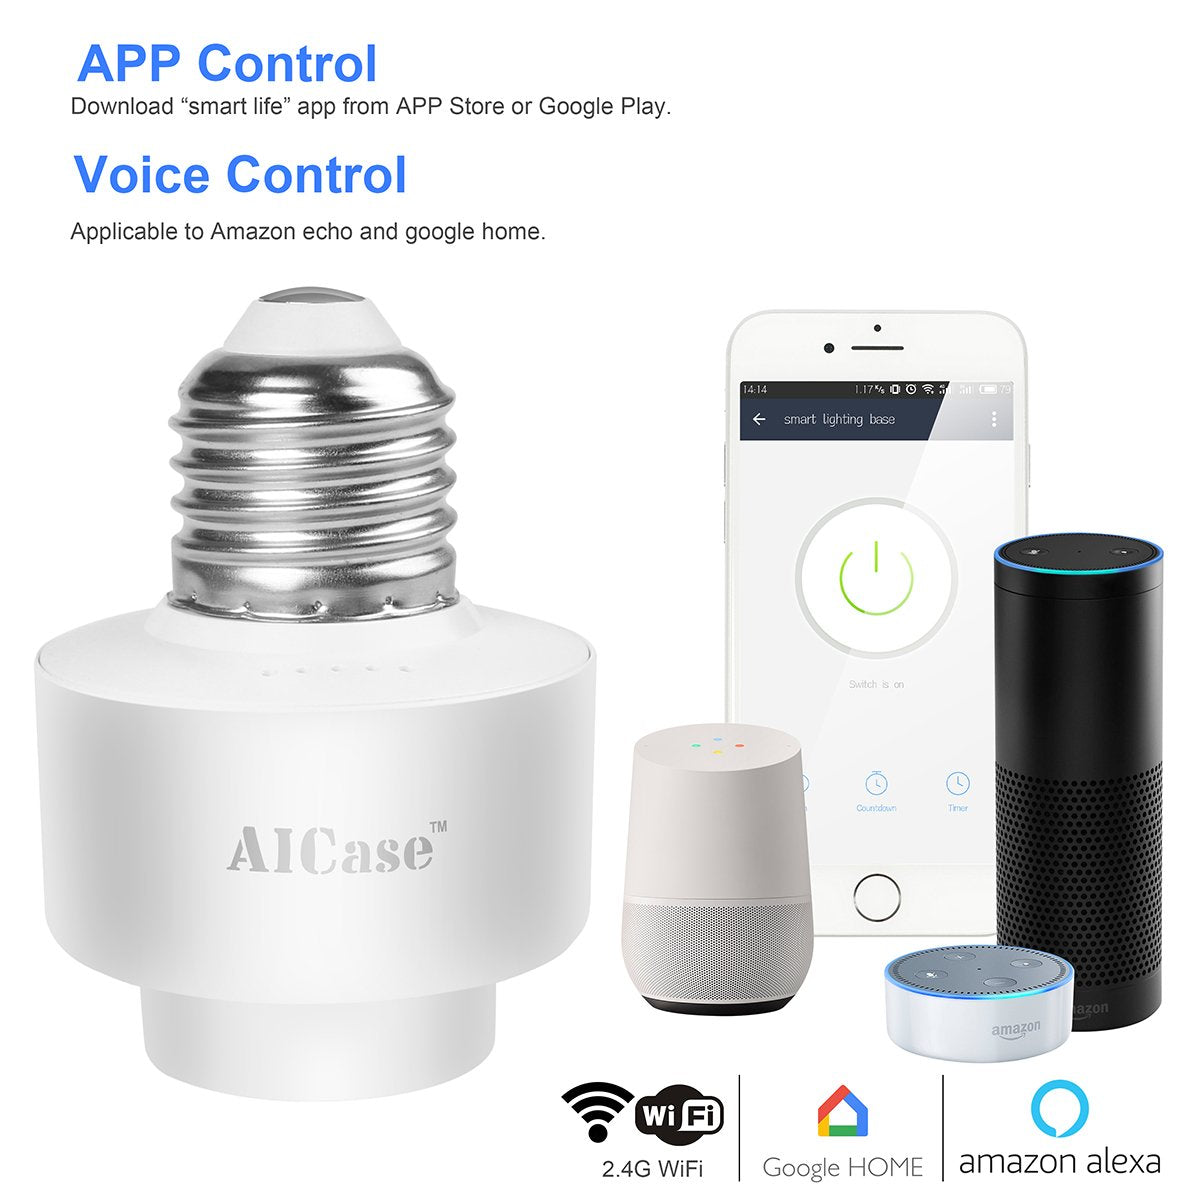 Smart Wifi E27 Light Socket, AICase Intelligent Wlan Home Remote